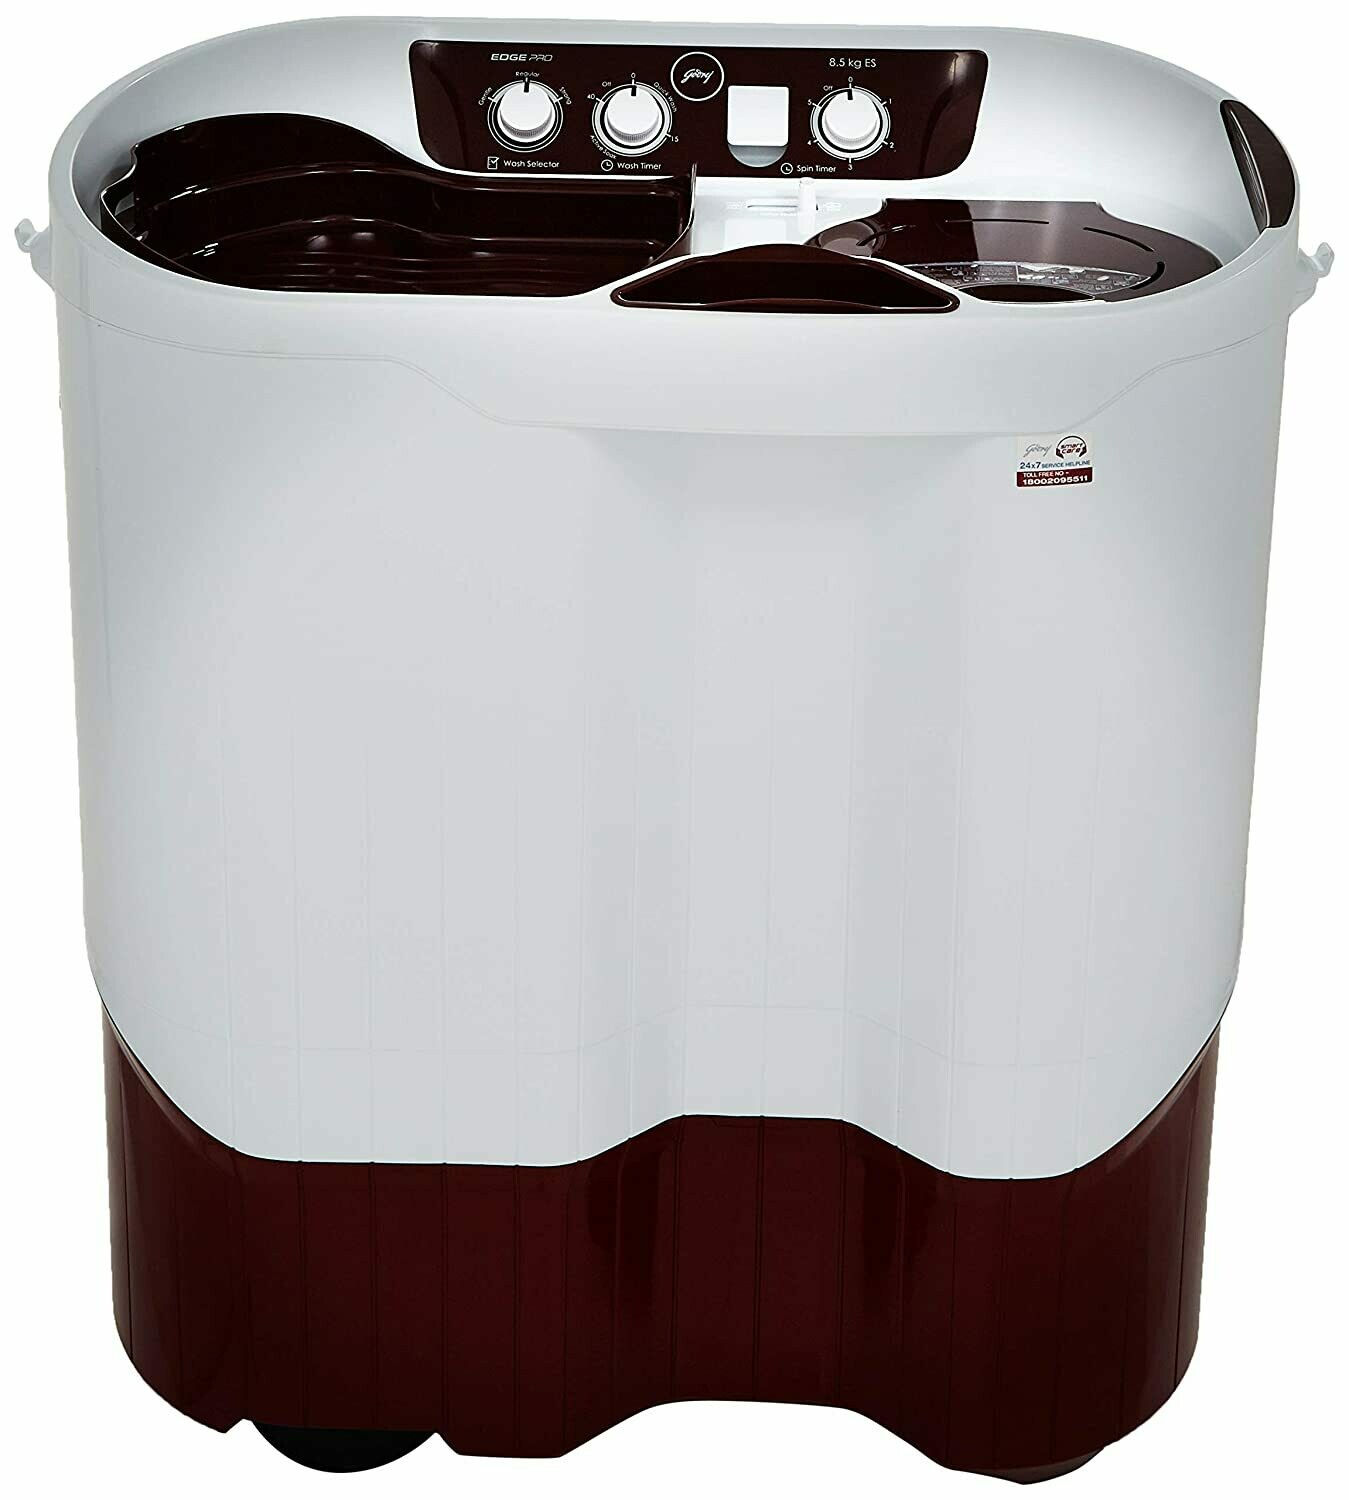 Godrej 8.5 Kg Semi-Automatic Top Loading Washing Machine (WS EDGEPRO 850 ES Wn Rd, Wine Red)